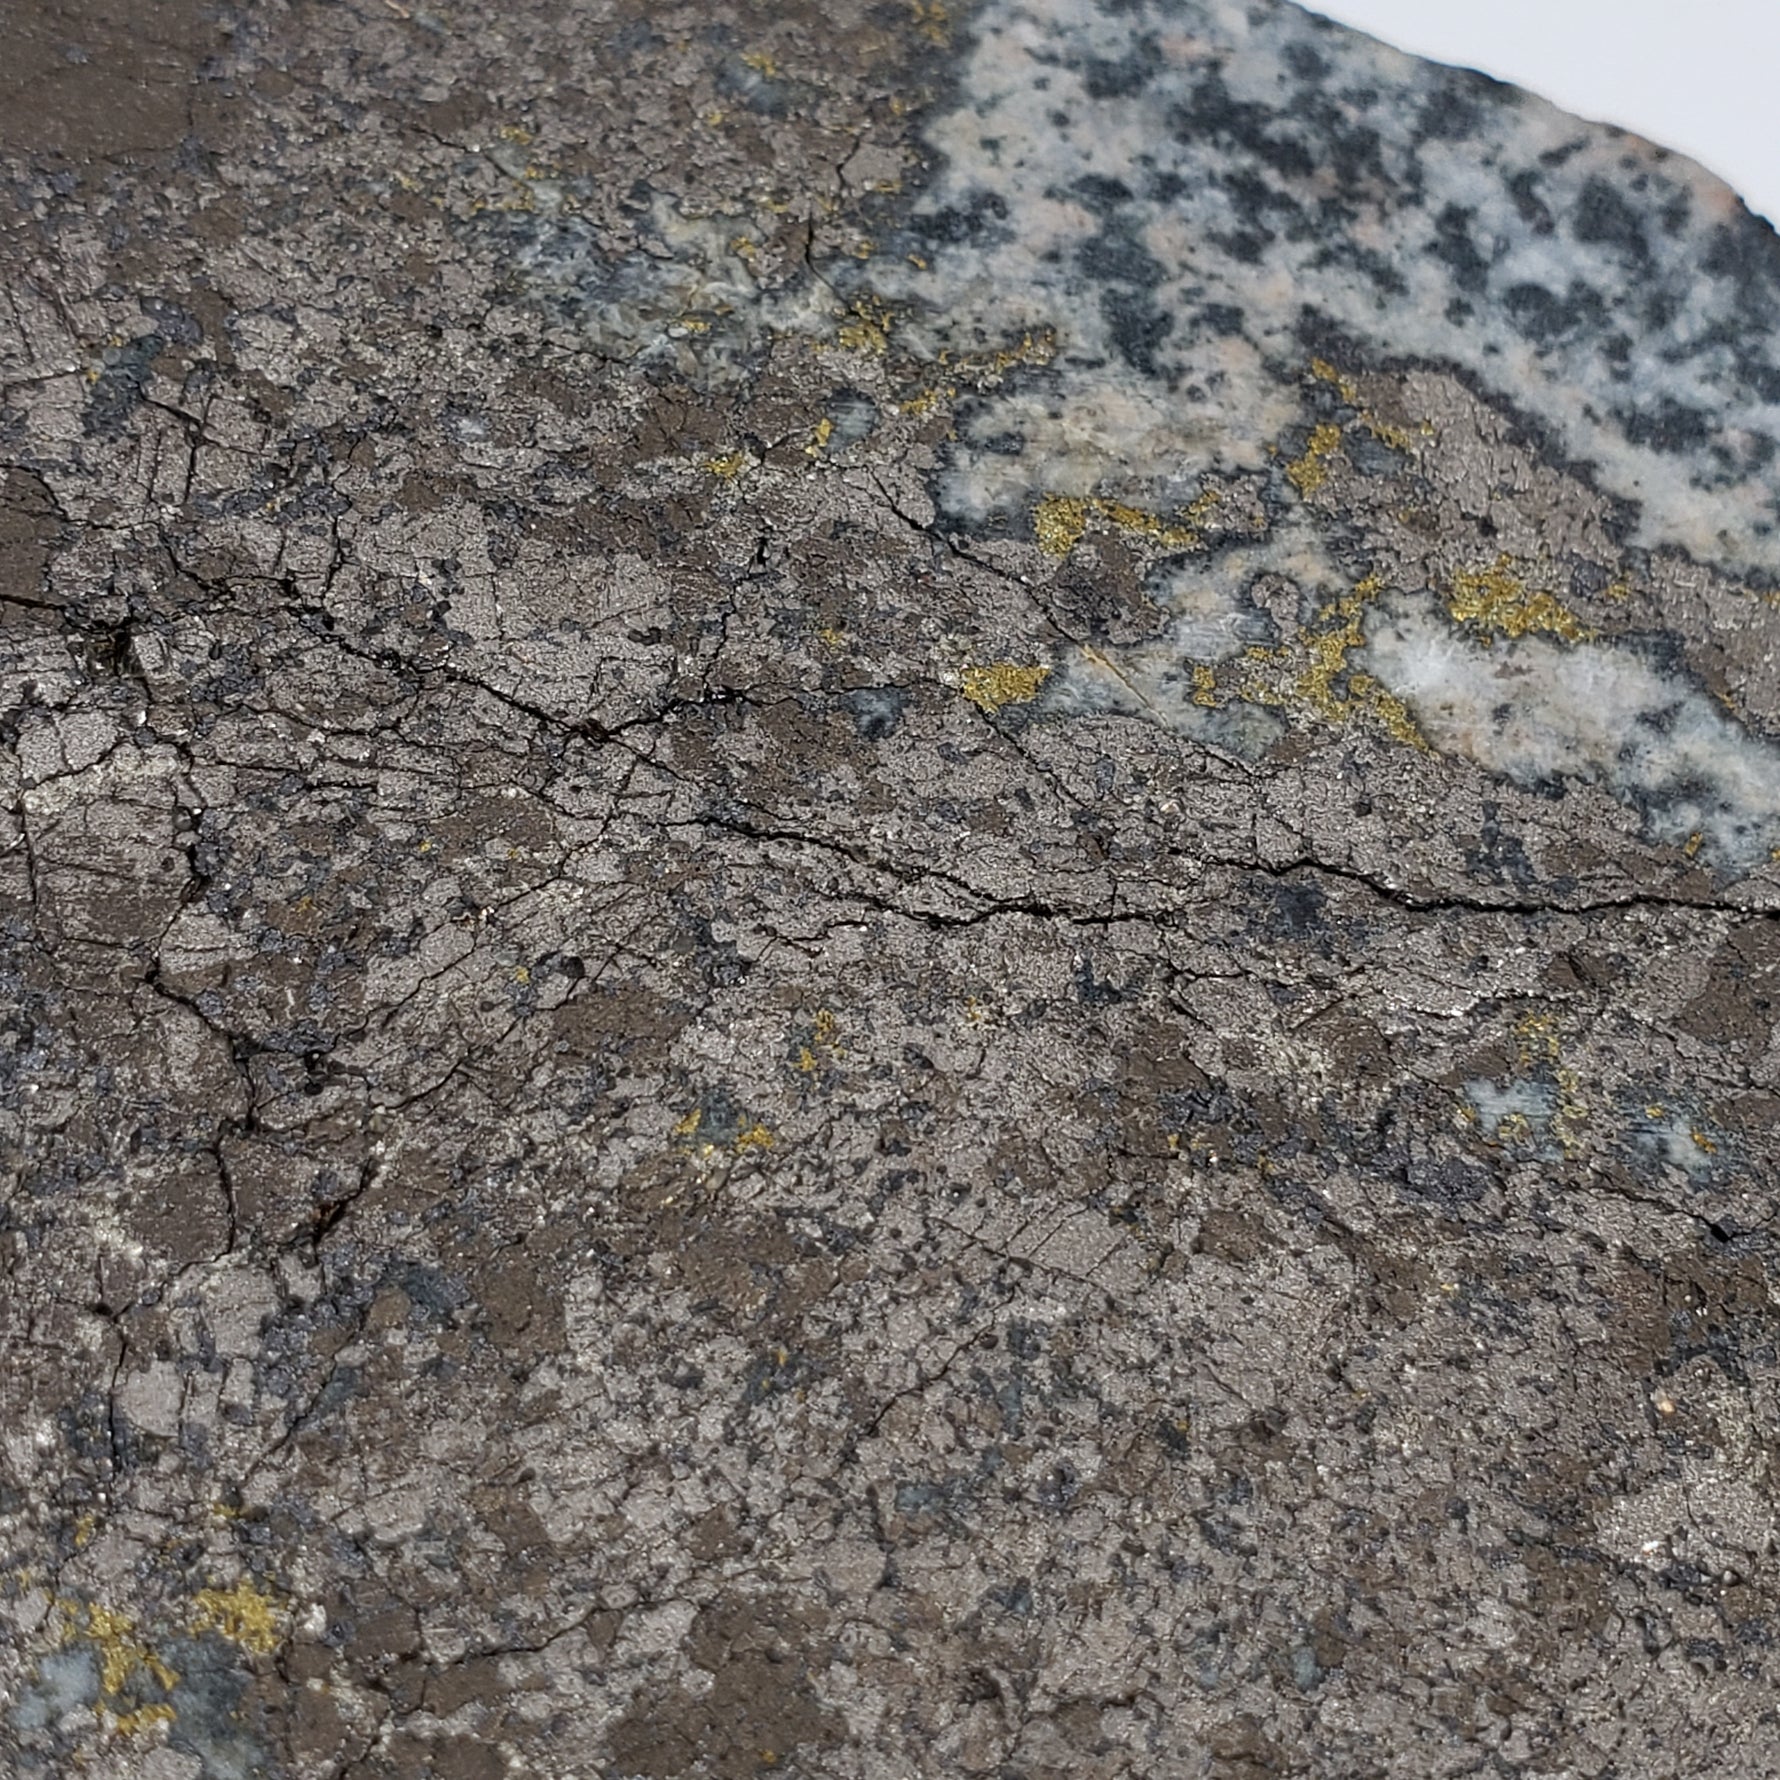 Impact Breccia | Part Slice | 222.8 Grams | Metal Rich Impactite | Sudbury Structure, Canada